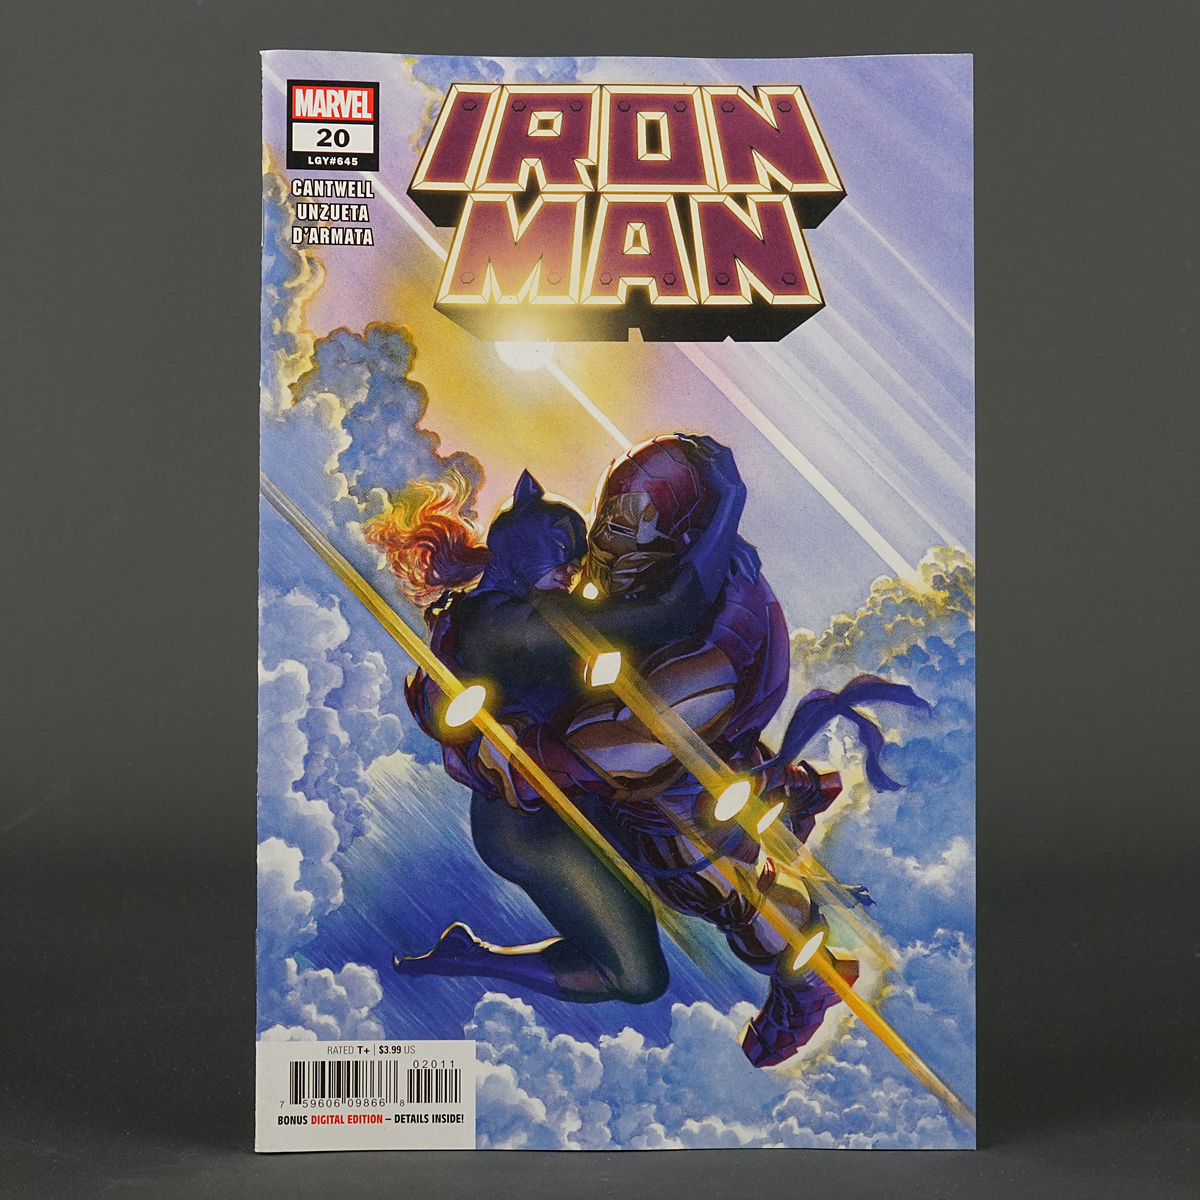 IRON MAN #20 Marvel Comics 2022 MAR221030 (W) Cantwell (A) Unzueta (CA) Ross